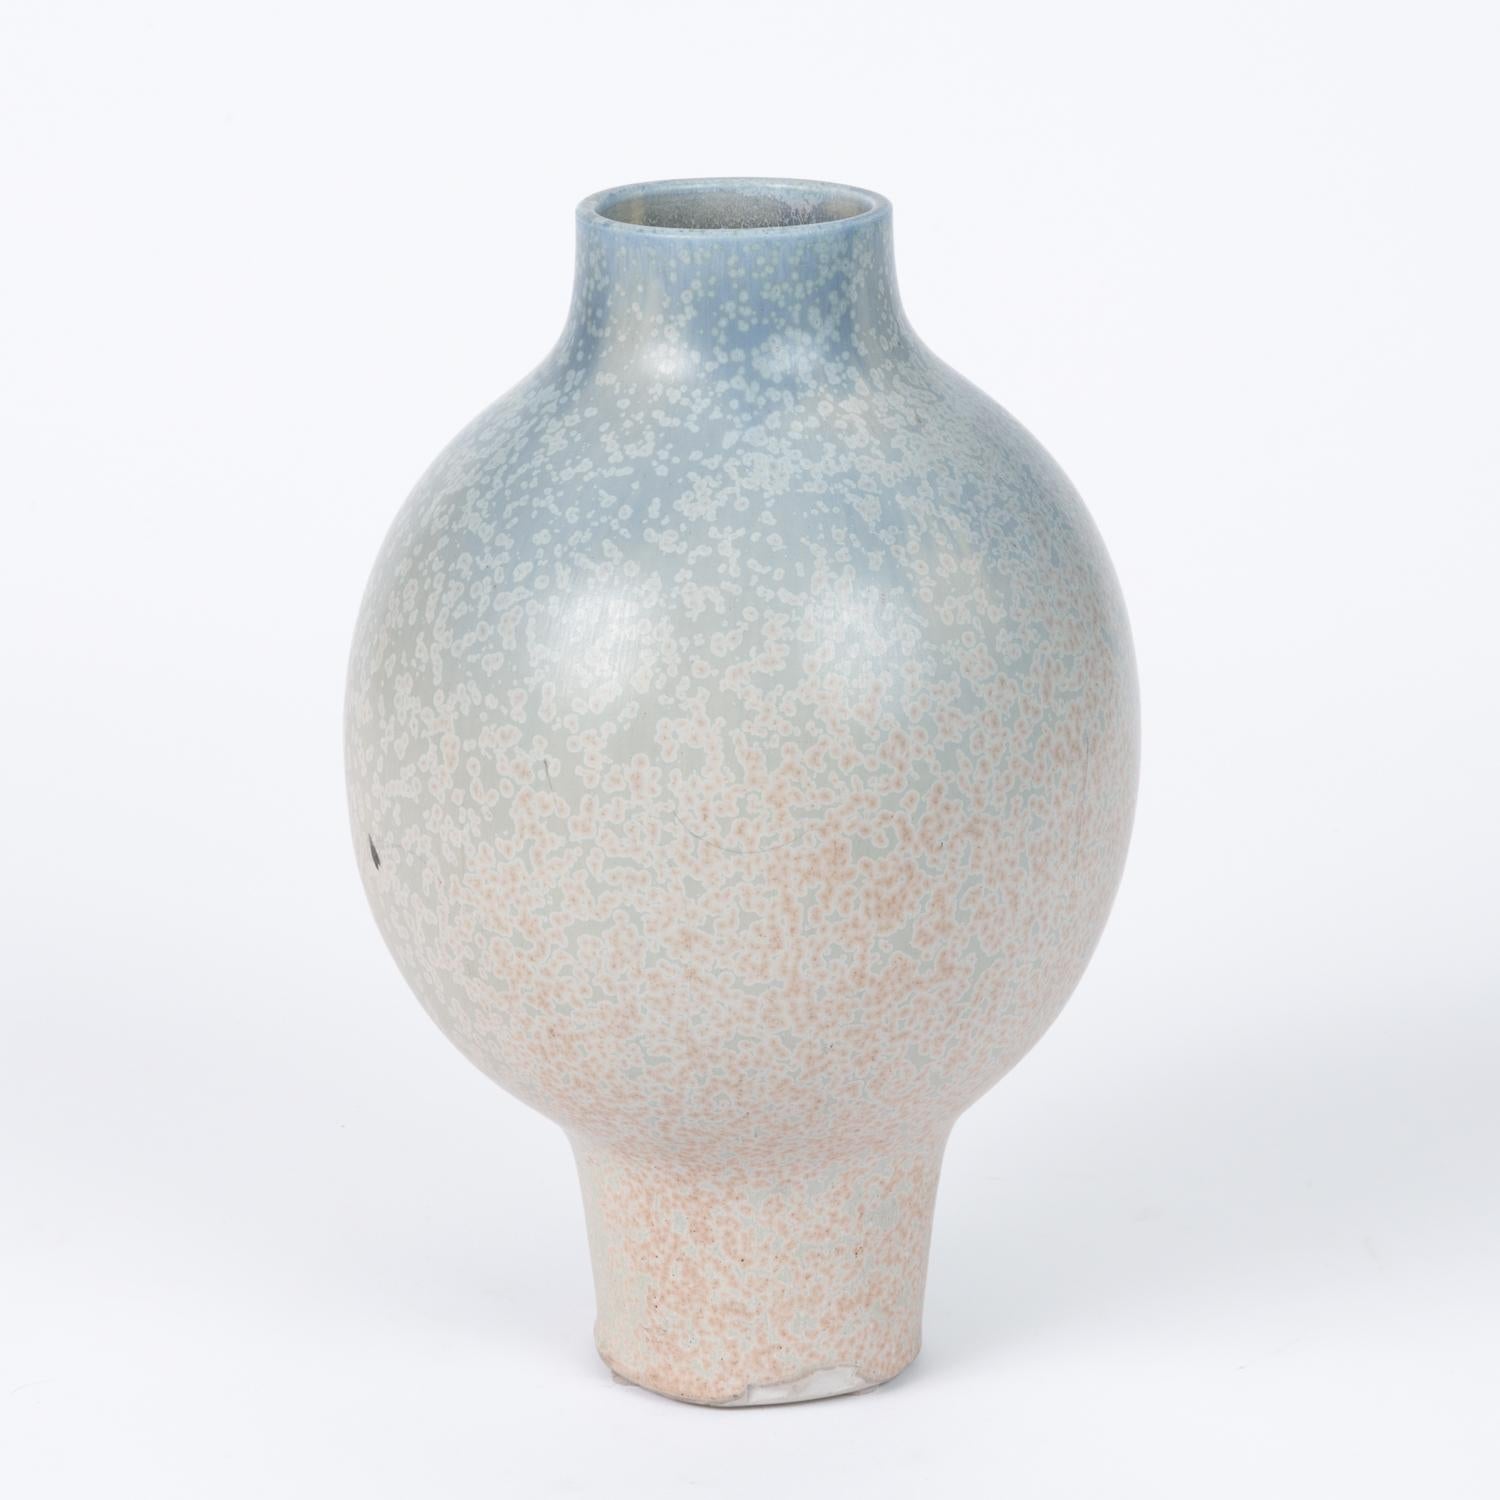 American Studio Pottery Vase with Light Ombre Glaze